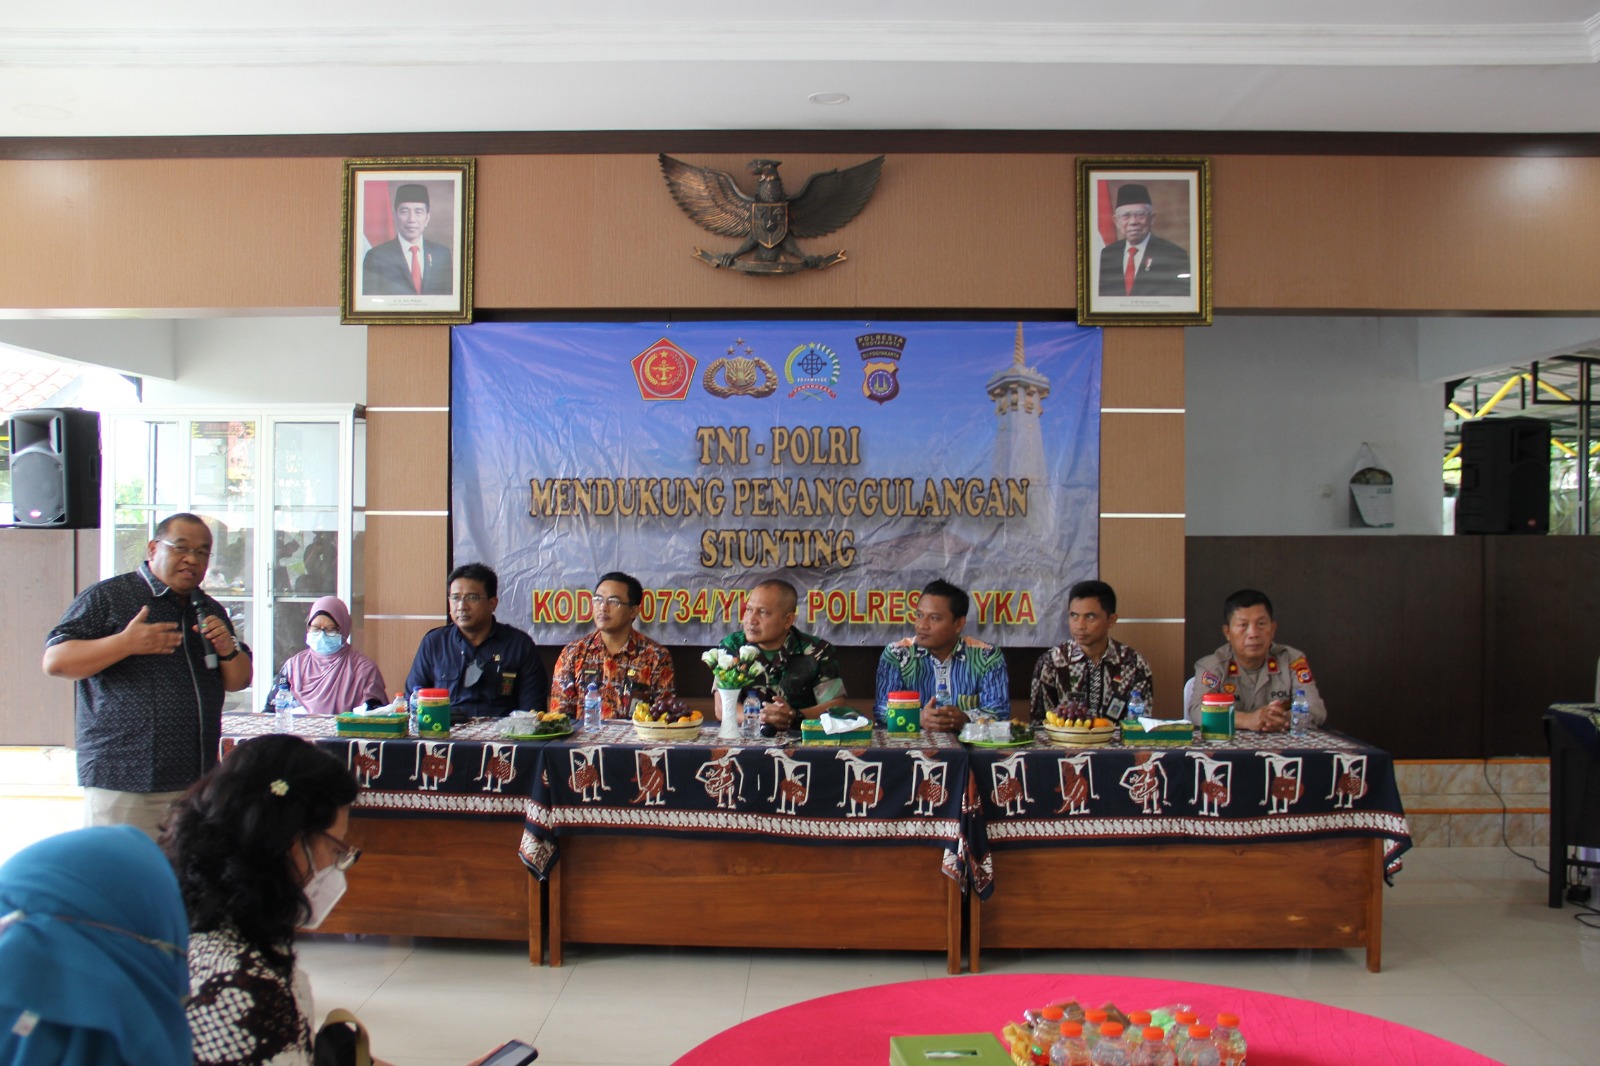 Pengadilan Negeri Yogyakarta Mendukung Optimalisasi Penanggulangan Stunting Di Wilayah Yogyakarta